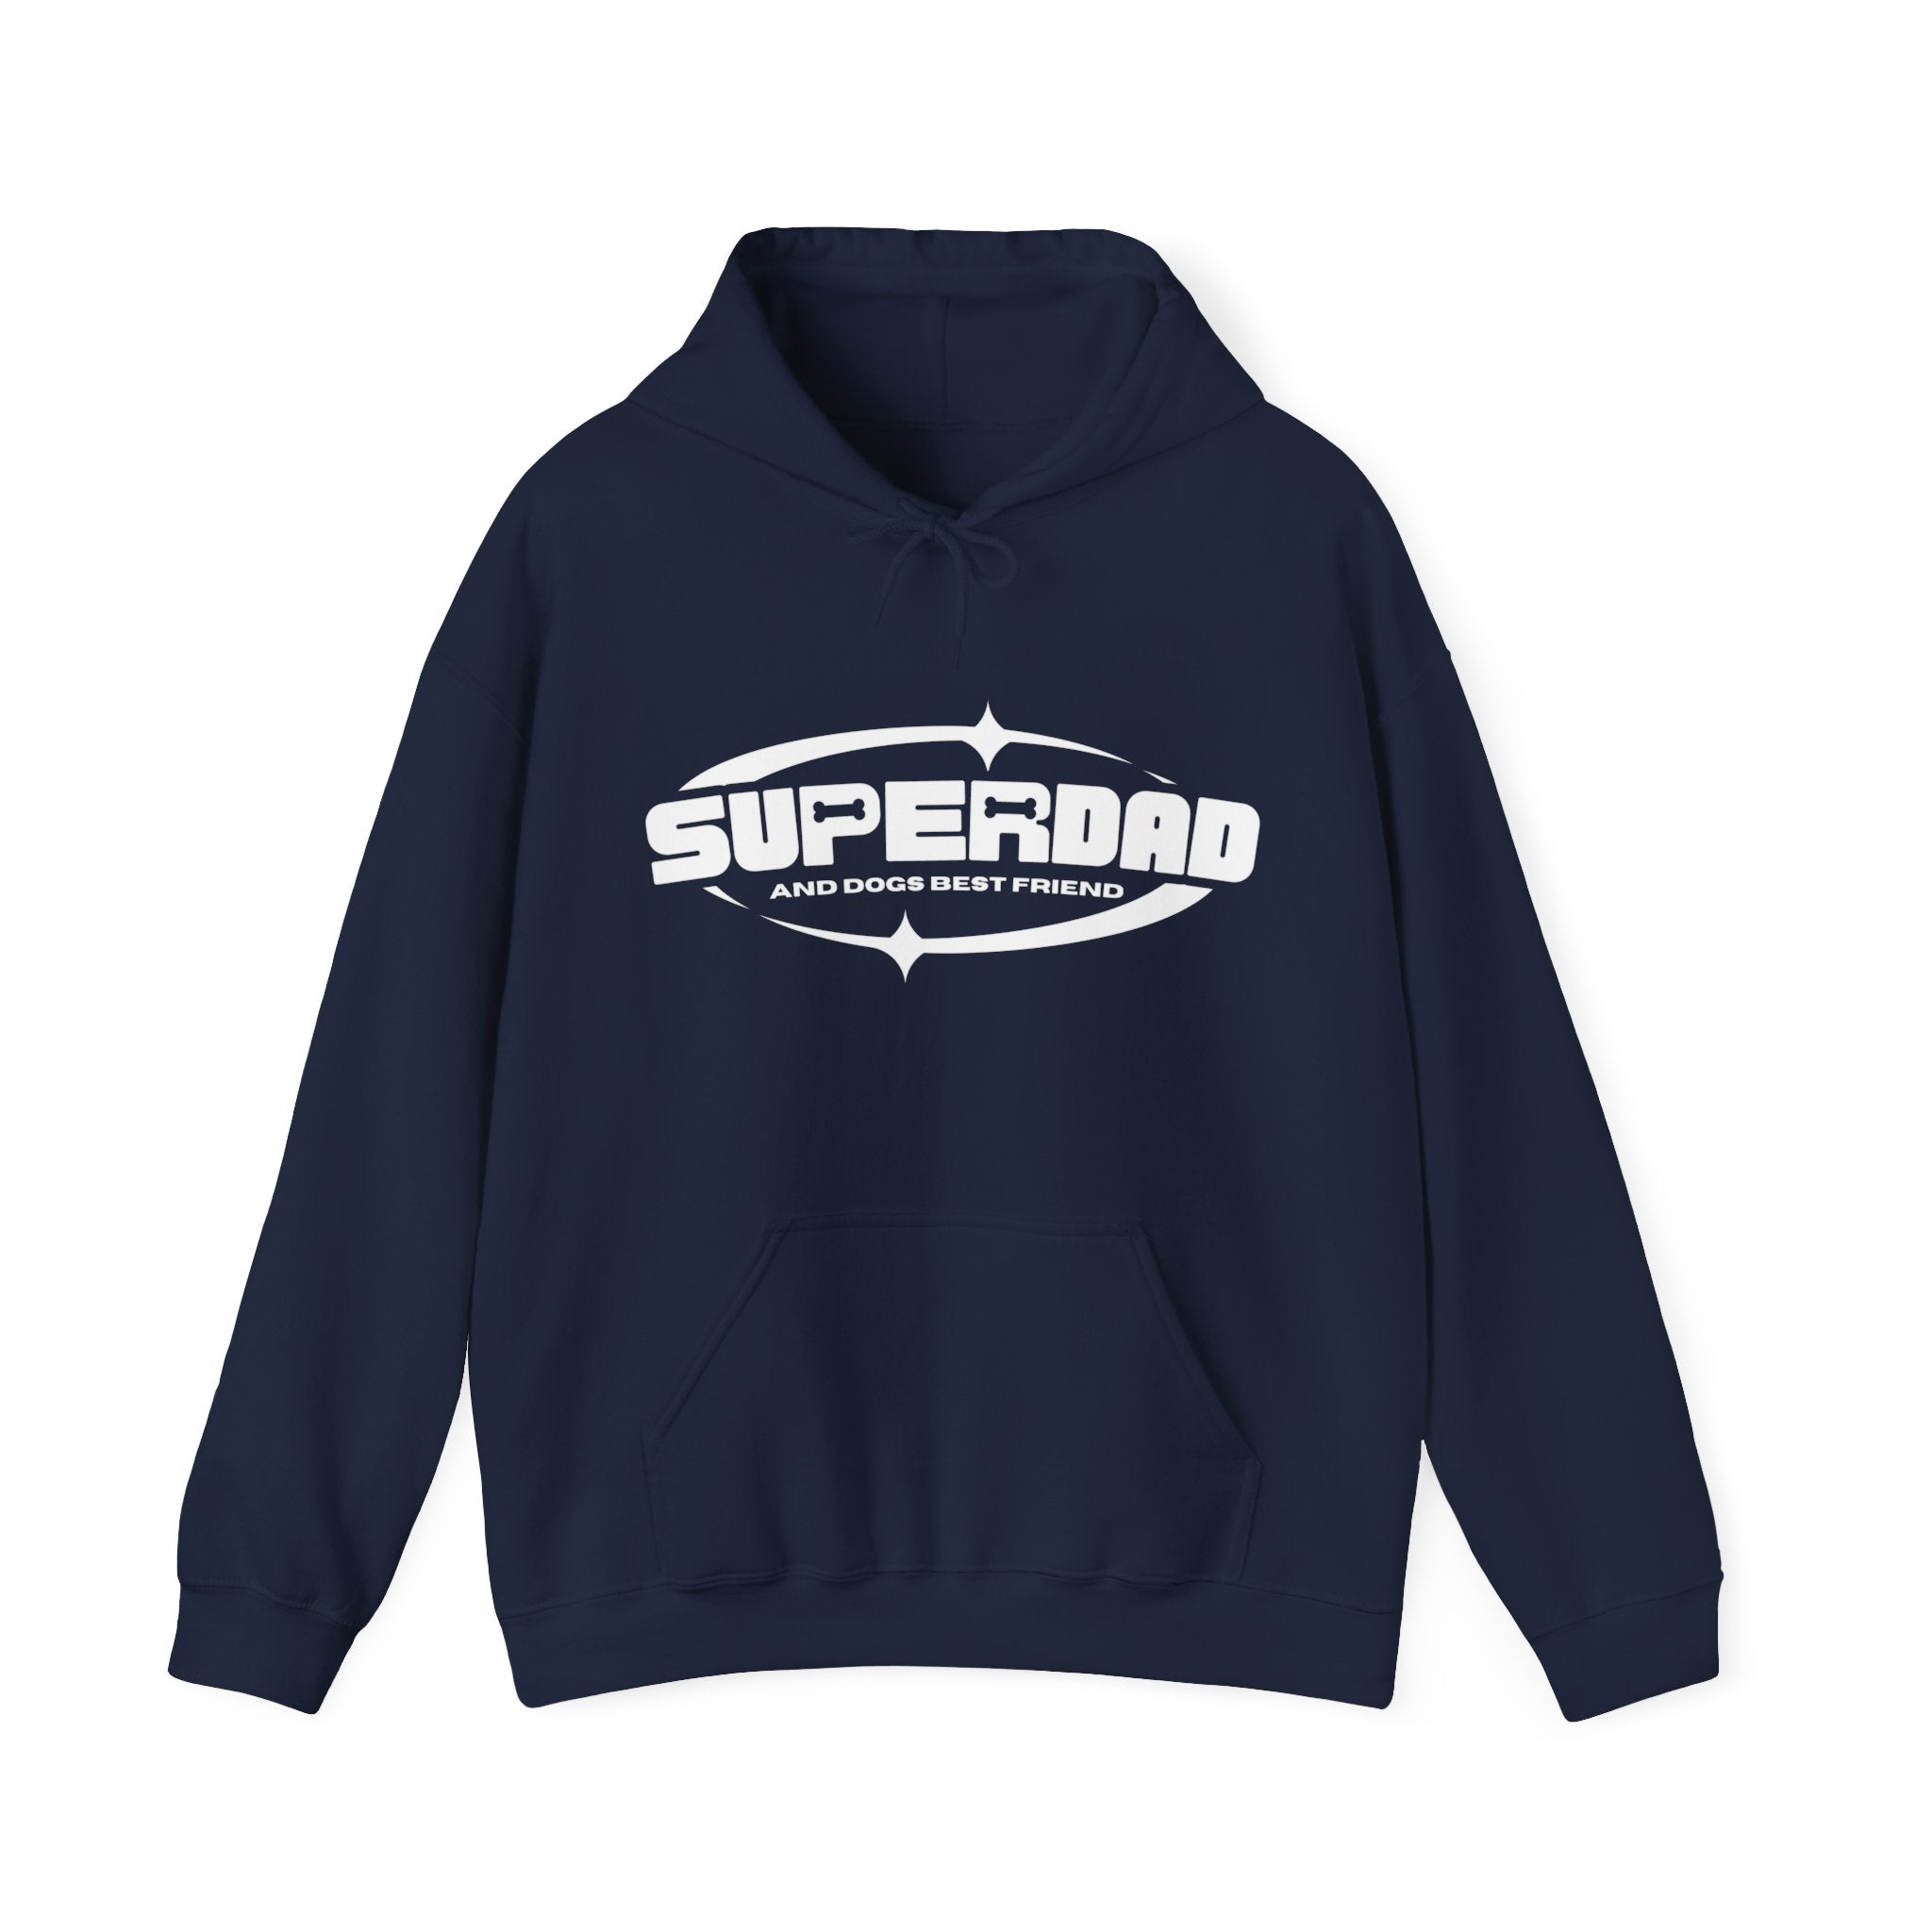  On a pristine white background lies a 'Superdad' unisex navy blue sweatshirt by Dogs Pure Love.